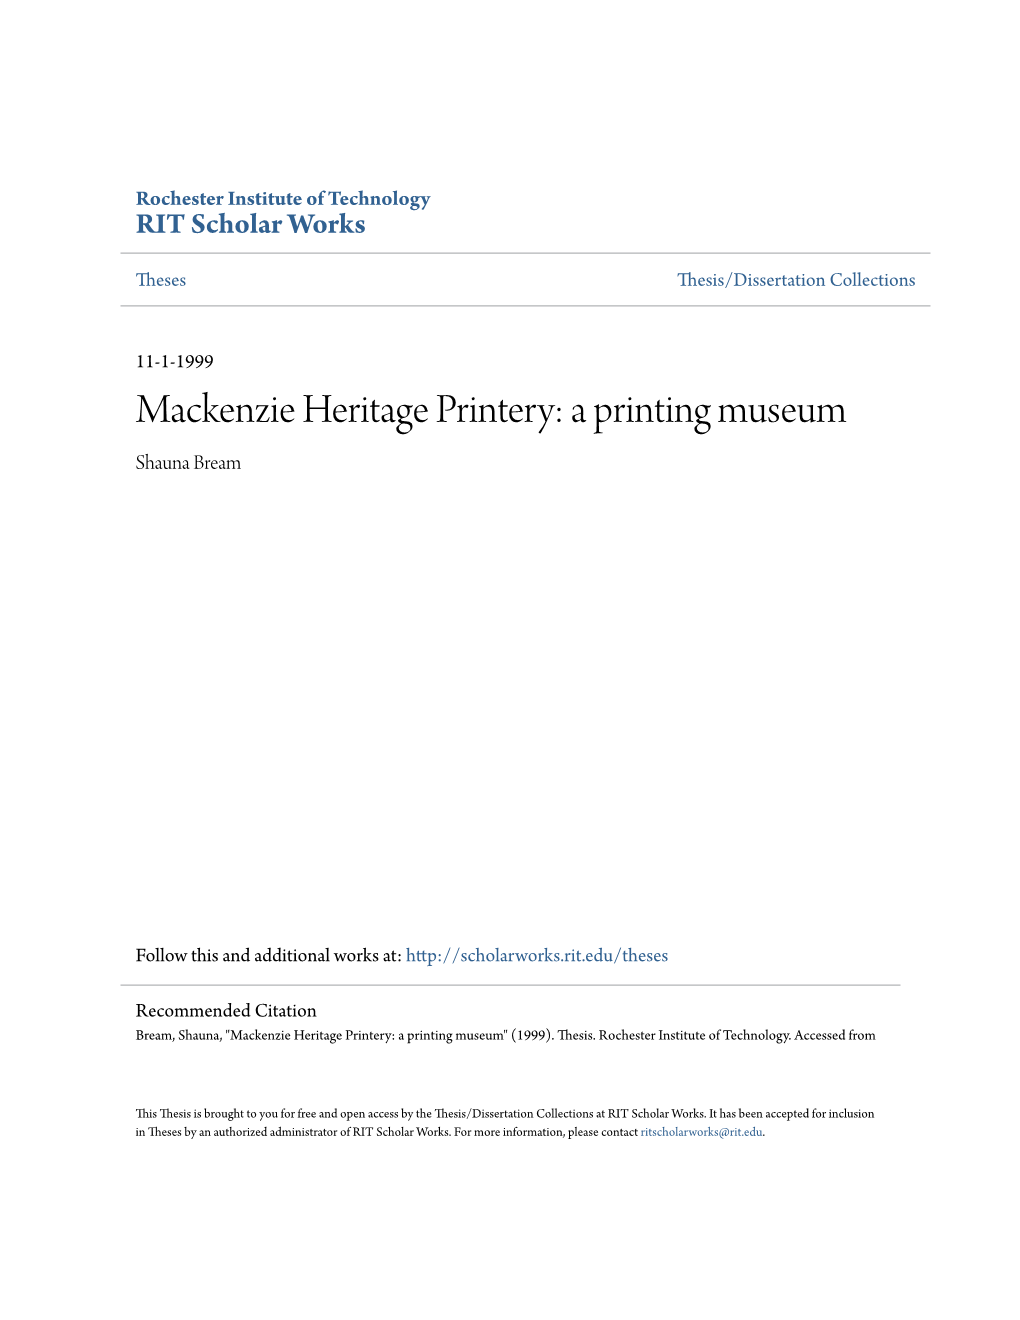 Mackenzie Heritage Printery: a Printing Museum Shauna Bream